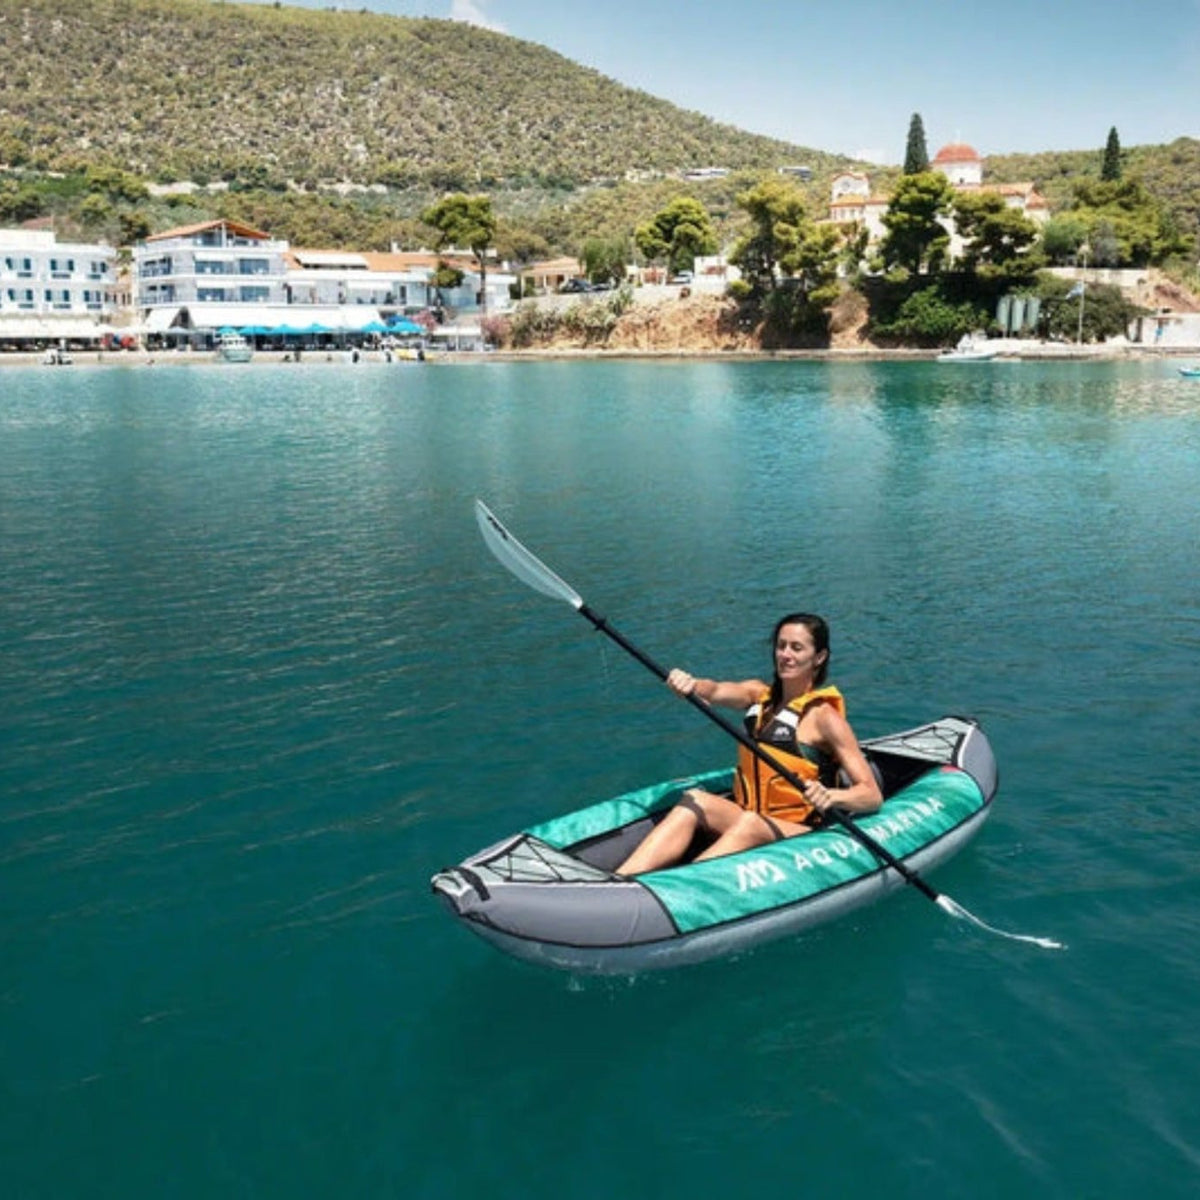 Aqua Marina - Laxo-285 Recreational Kayak - 1 person. Inflatable deck. Kayak paddle included. | LA-285-22